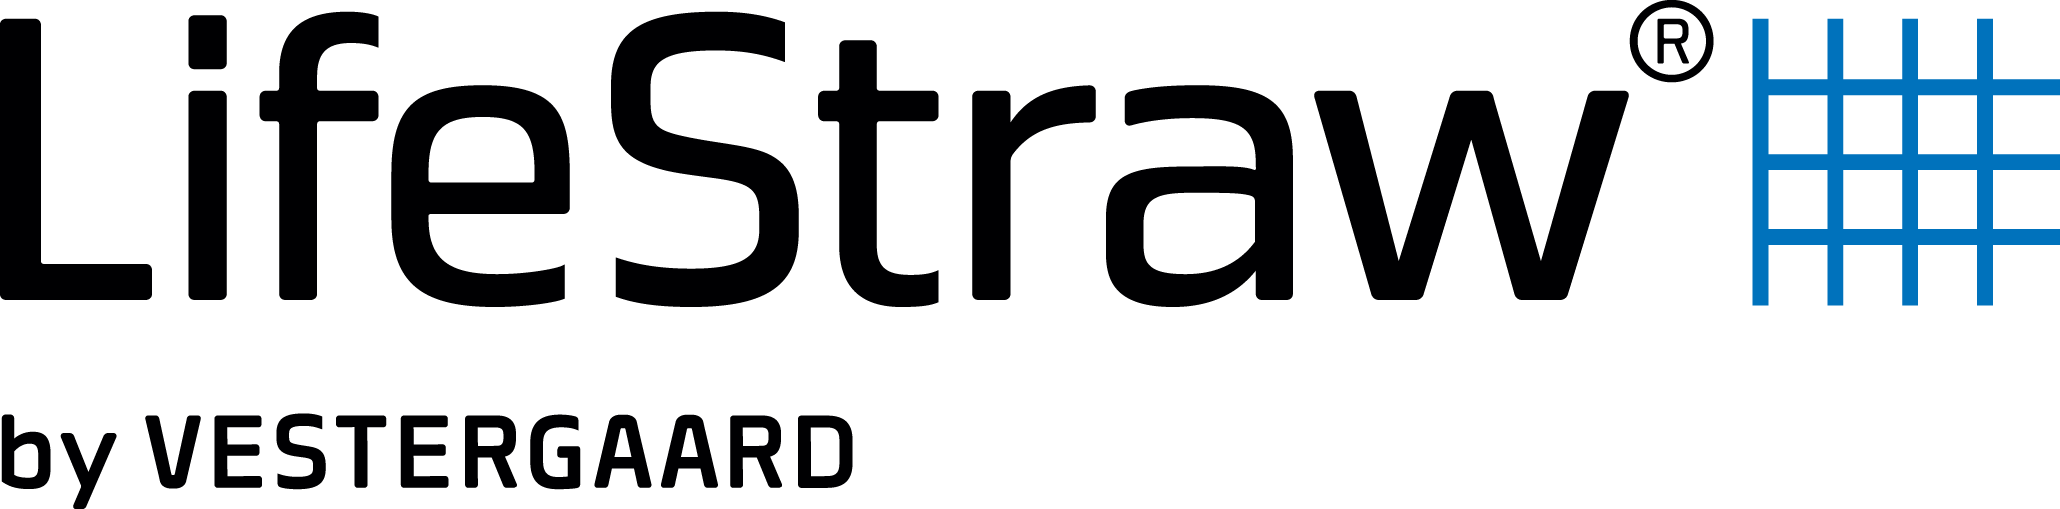 LifeStraw_Logo-Black-Text_05.png